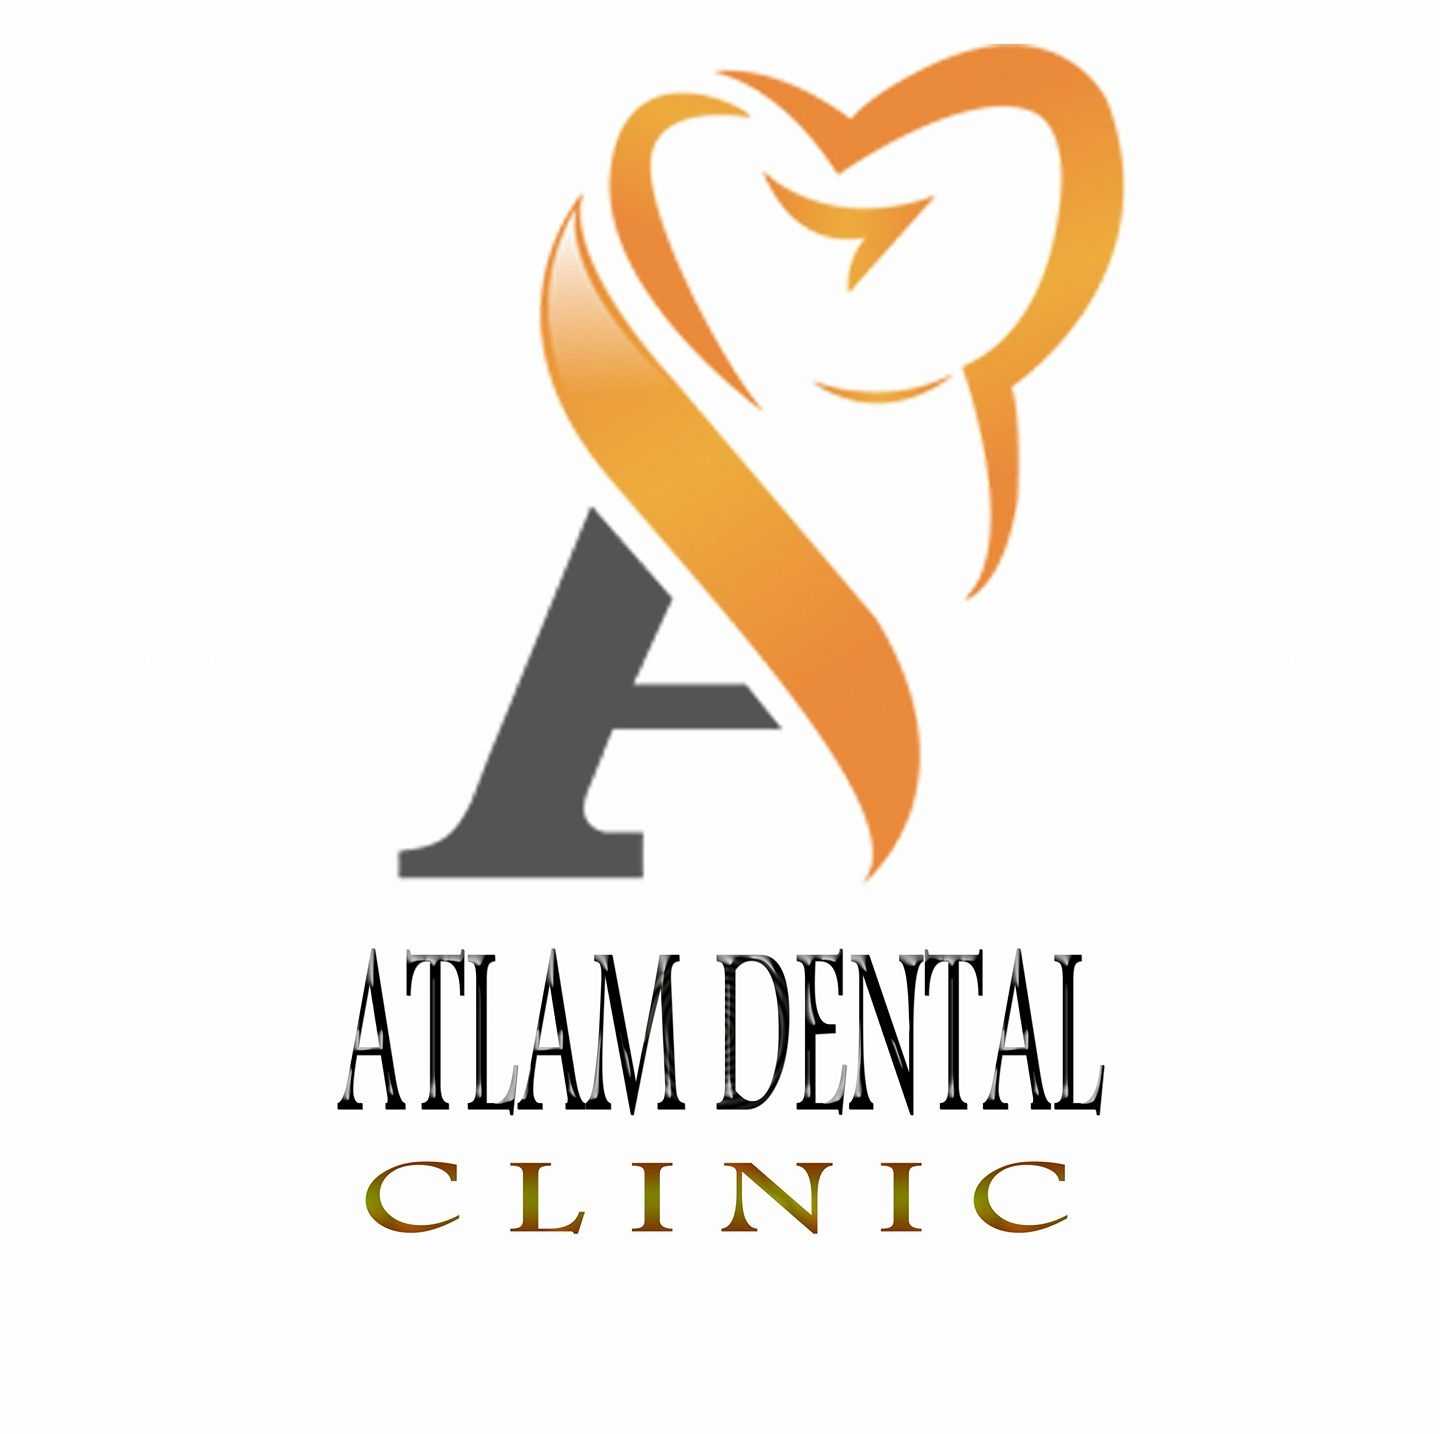 ATLAM Dental Clinic